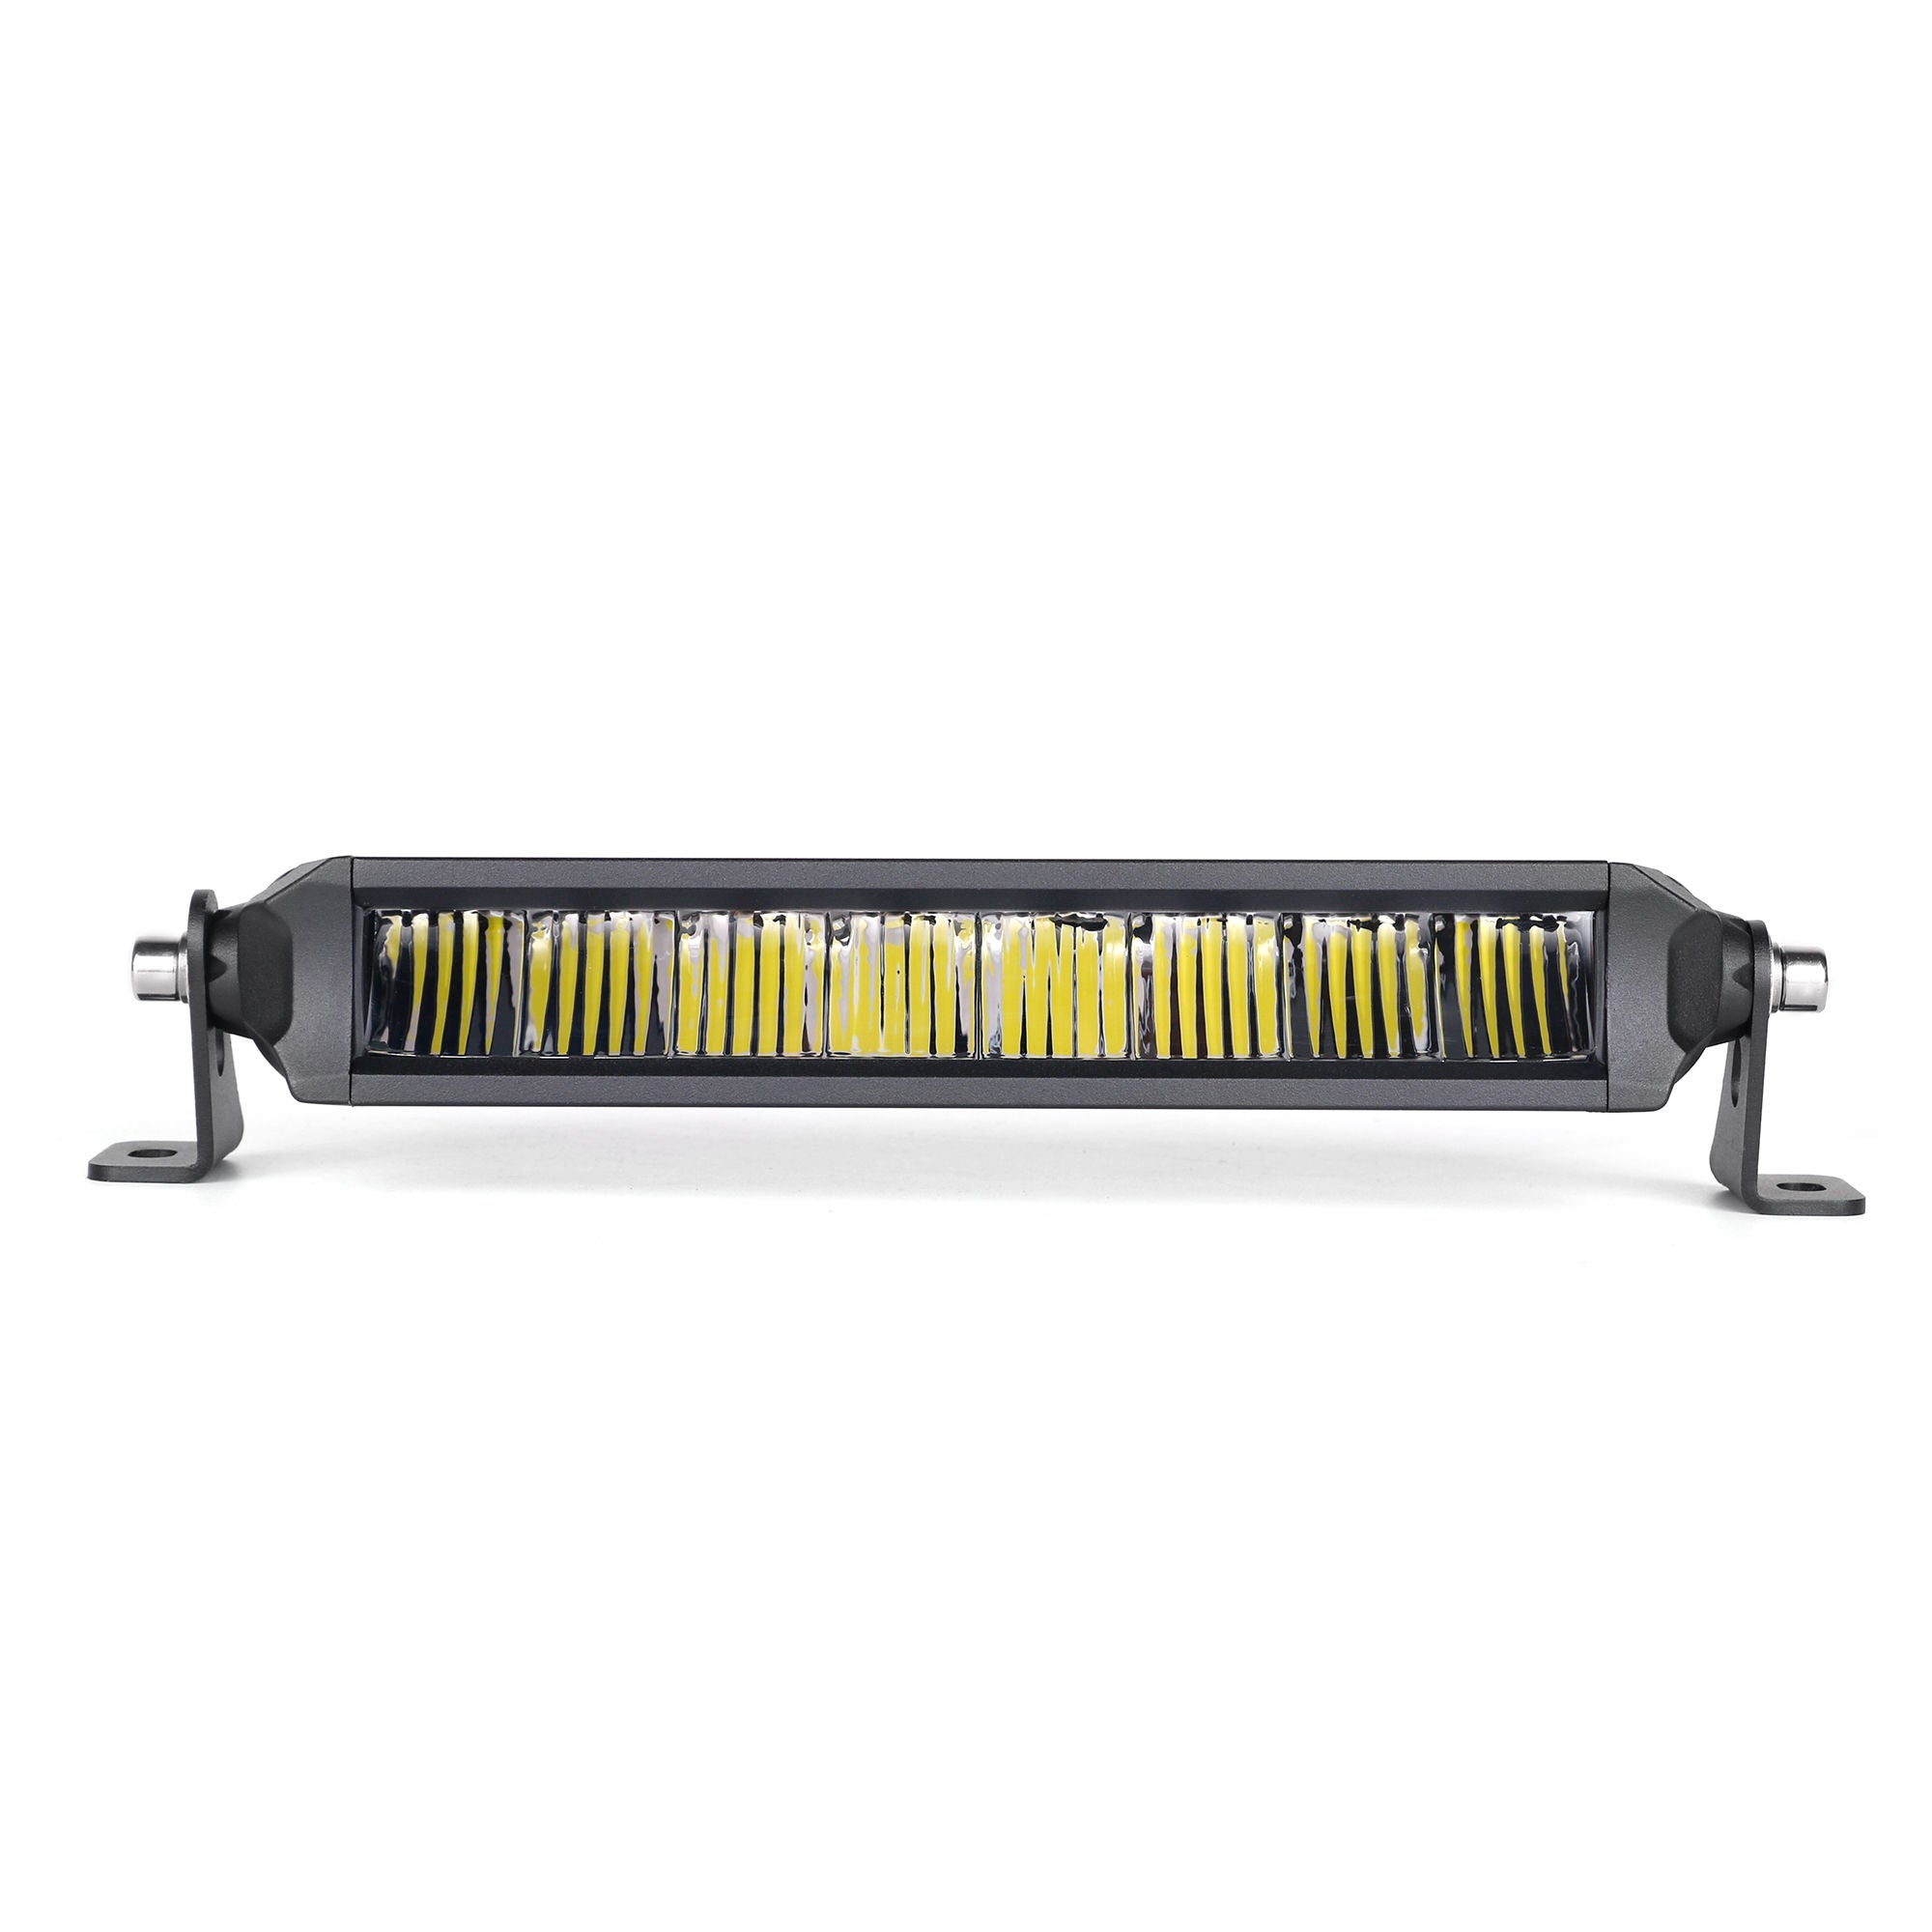 RTXOA41A610 - Street Legal Multi-Function Single Row Light Bar, 5W Led, Auxiliary Fog Light, 10", 1430Lm